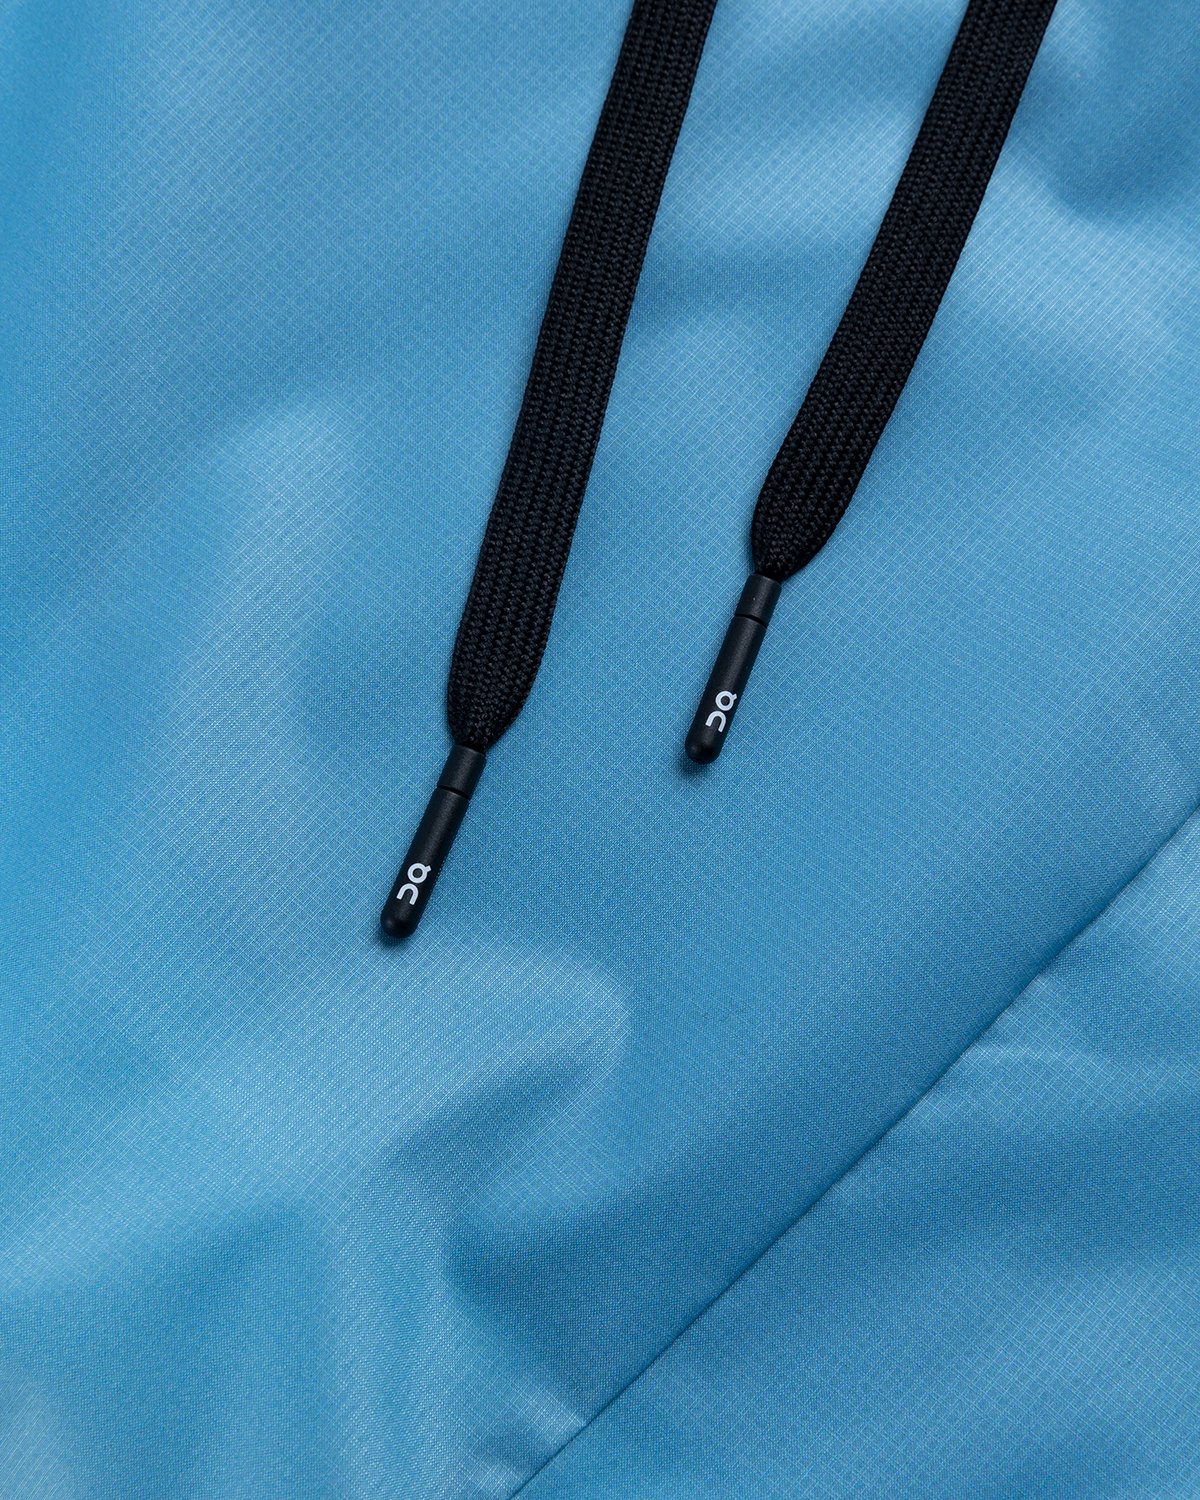 Loewe x On - Men's Technical Running Pants Gradient Grey - Clothing - Blue - Image 6